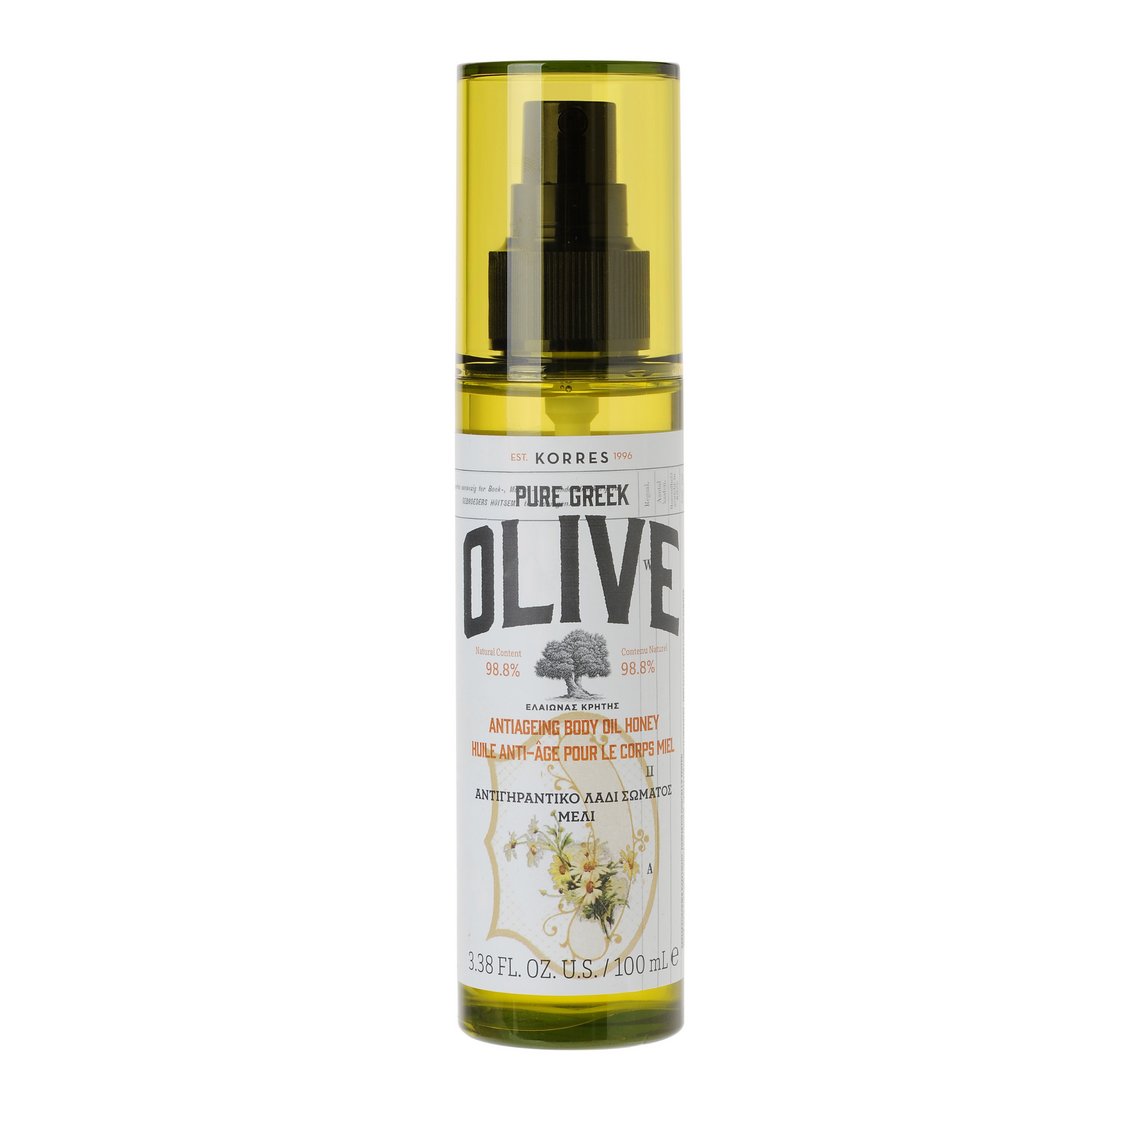 Pure Greek Olive Anti-Ageing Body Oil Honey: Korres